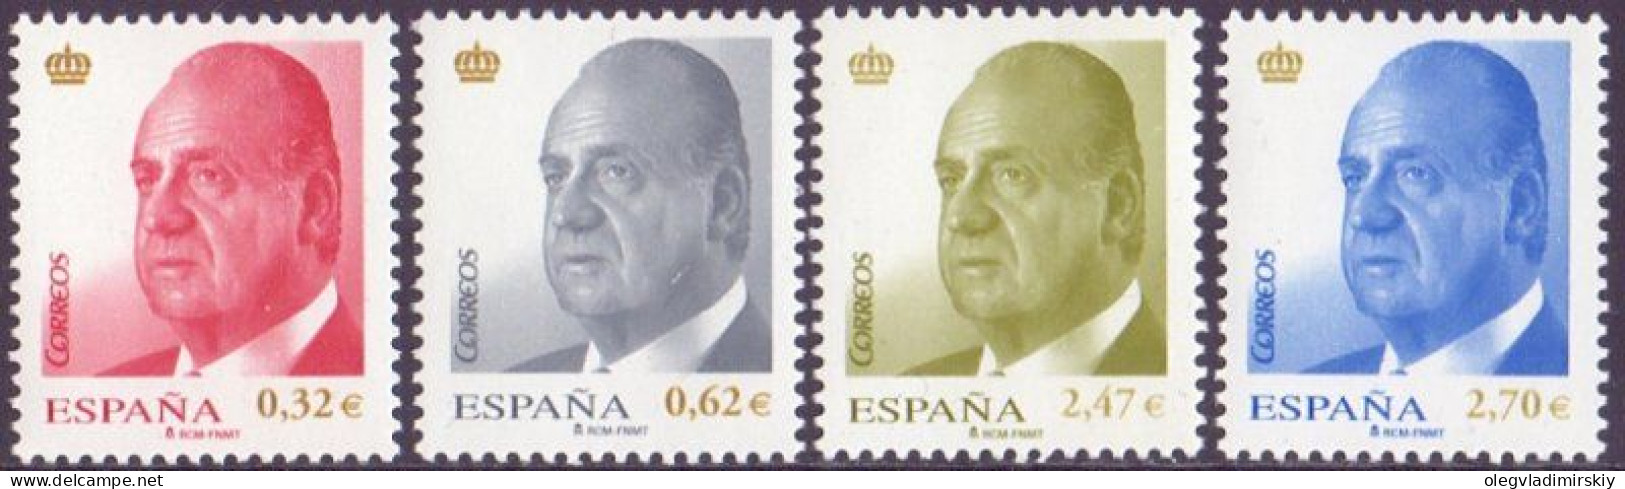 Spain Espagne Spanien 2009 King Juan Carlos I Definitives Set Of 4 Stamps MNH - Neufs